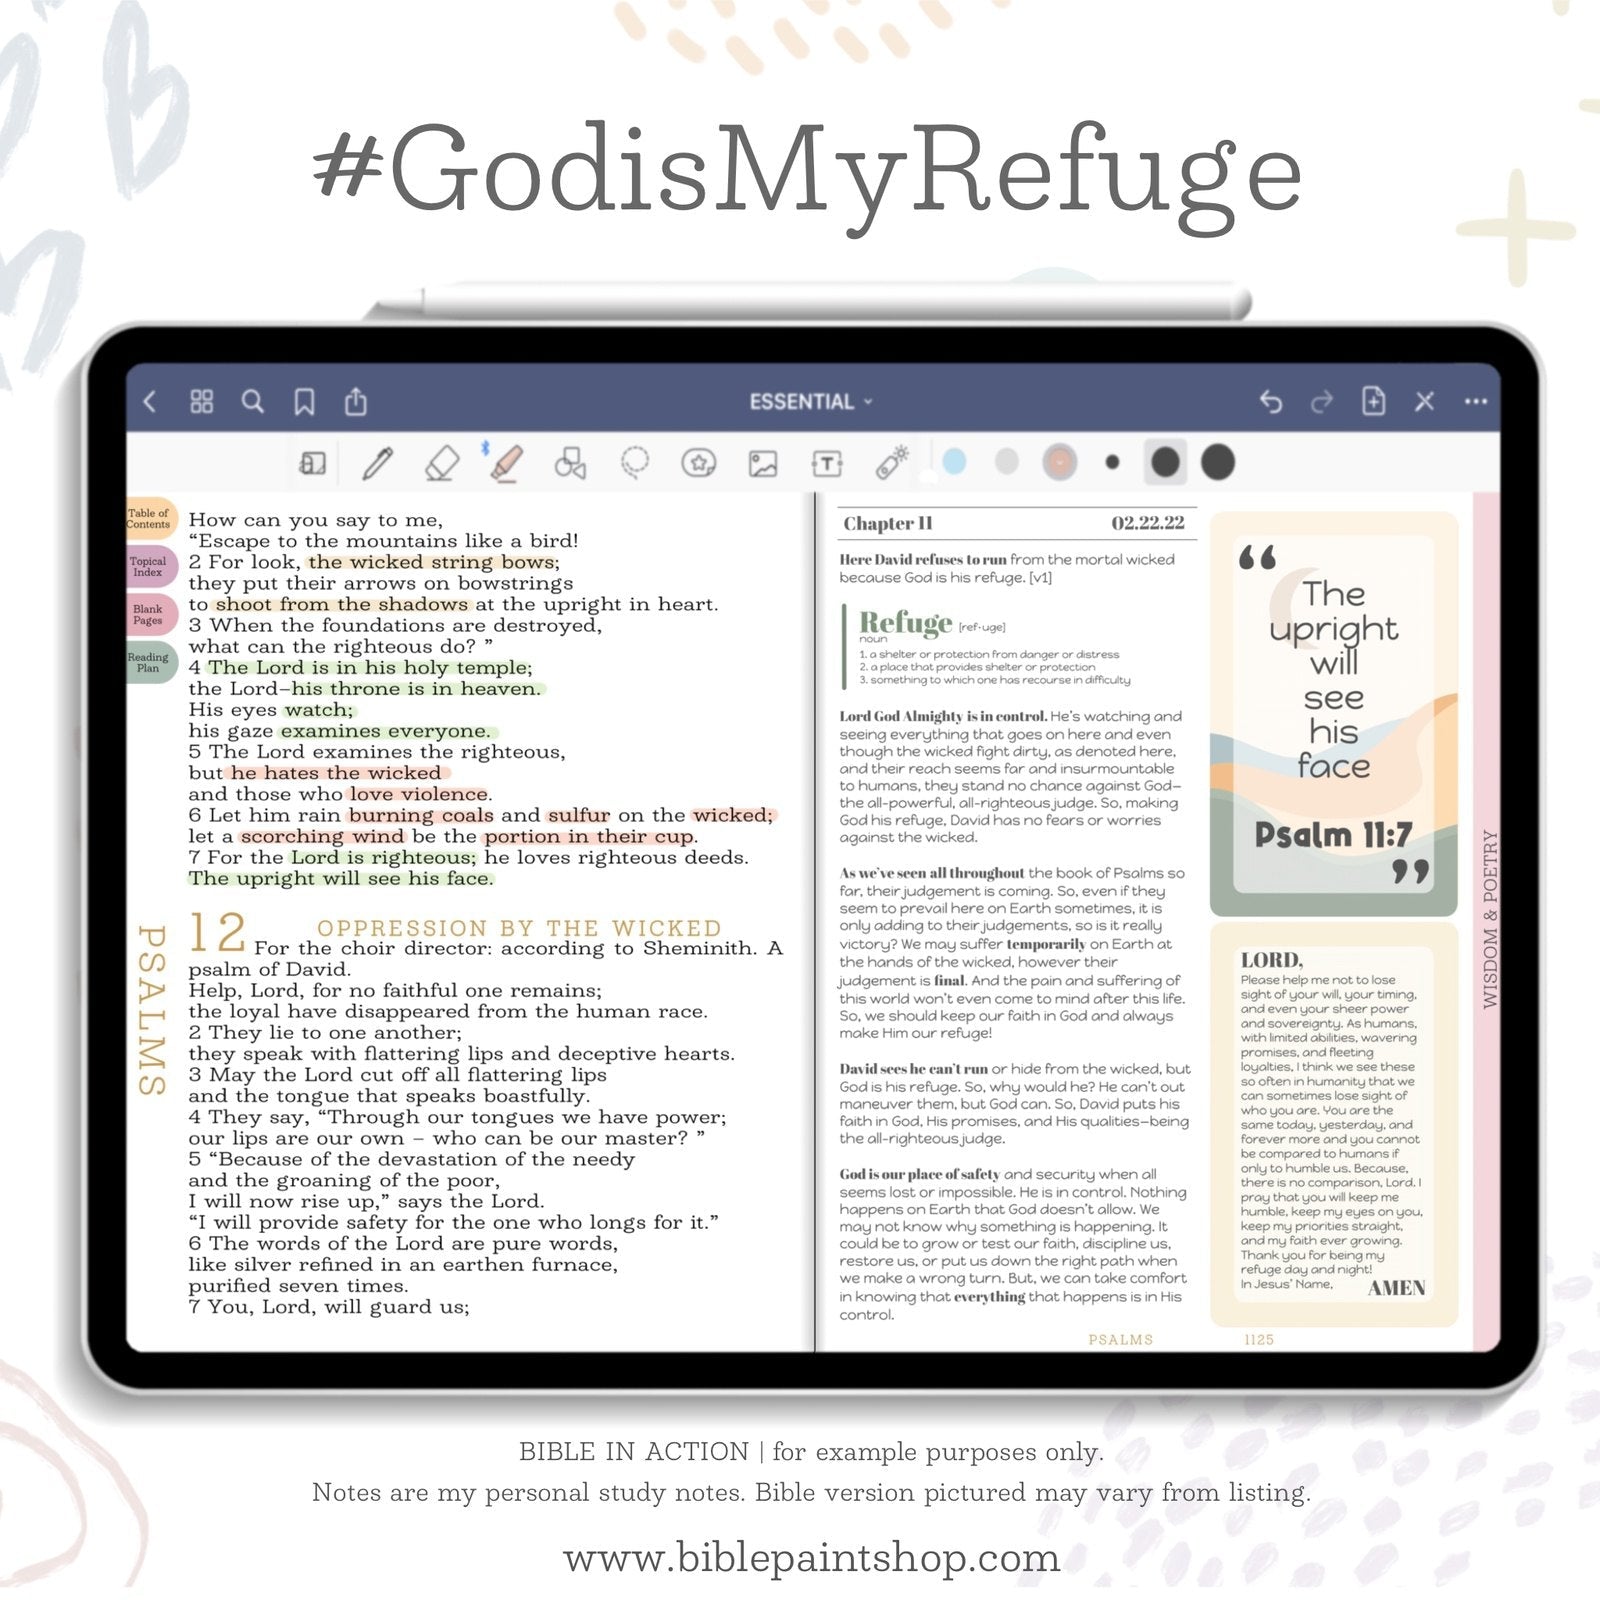 Digital Journaling Bible | Essential Series | KJV - Bible Paintshop